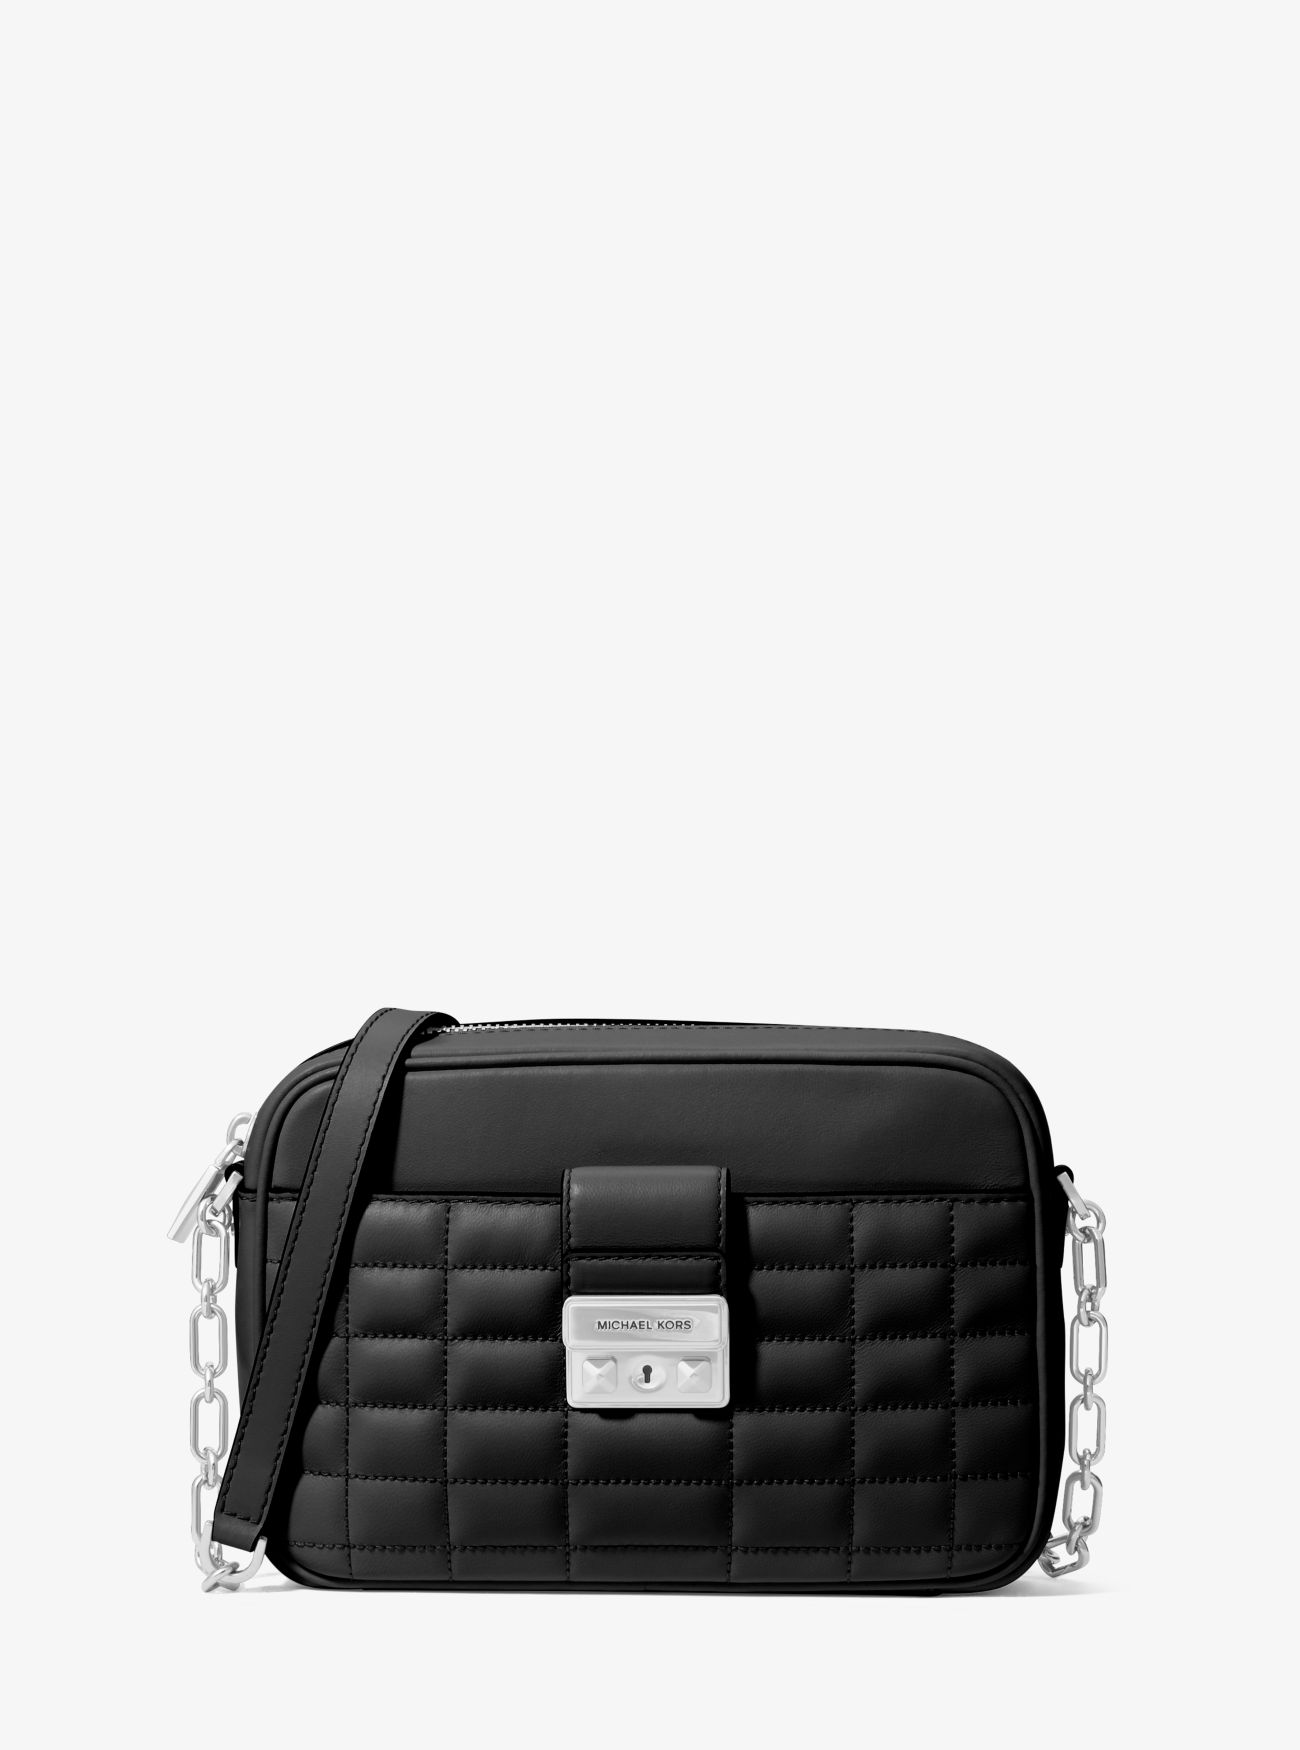 MK Tribeca Medium Quilted Leather Camera Bag - Black - Michael Kors